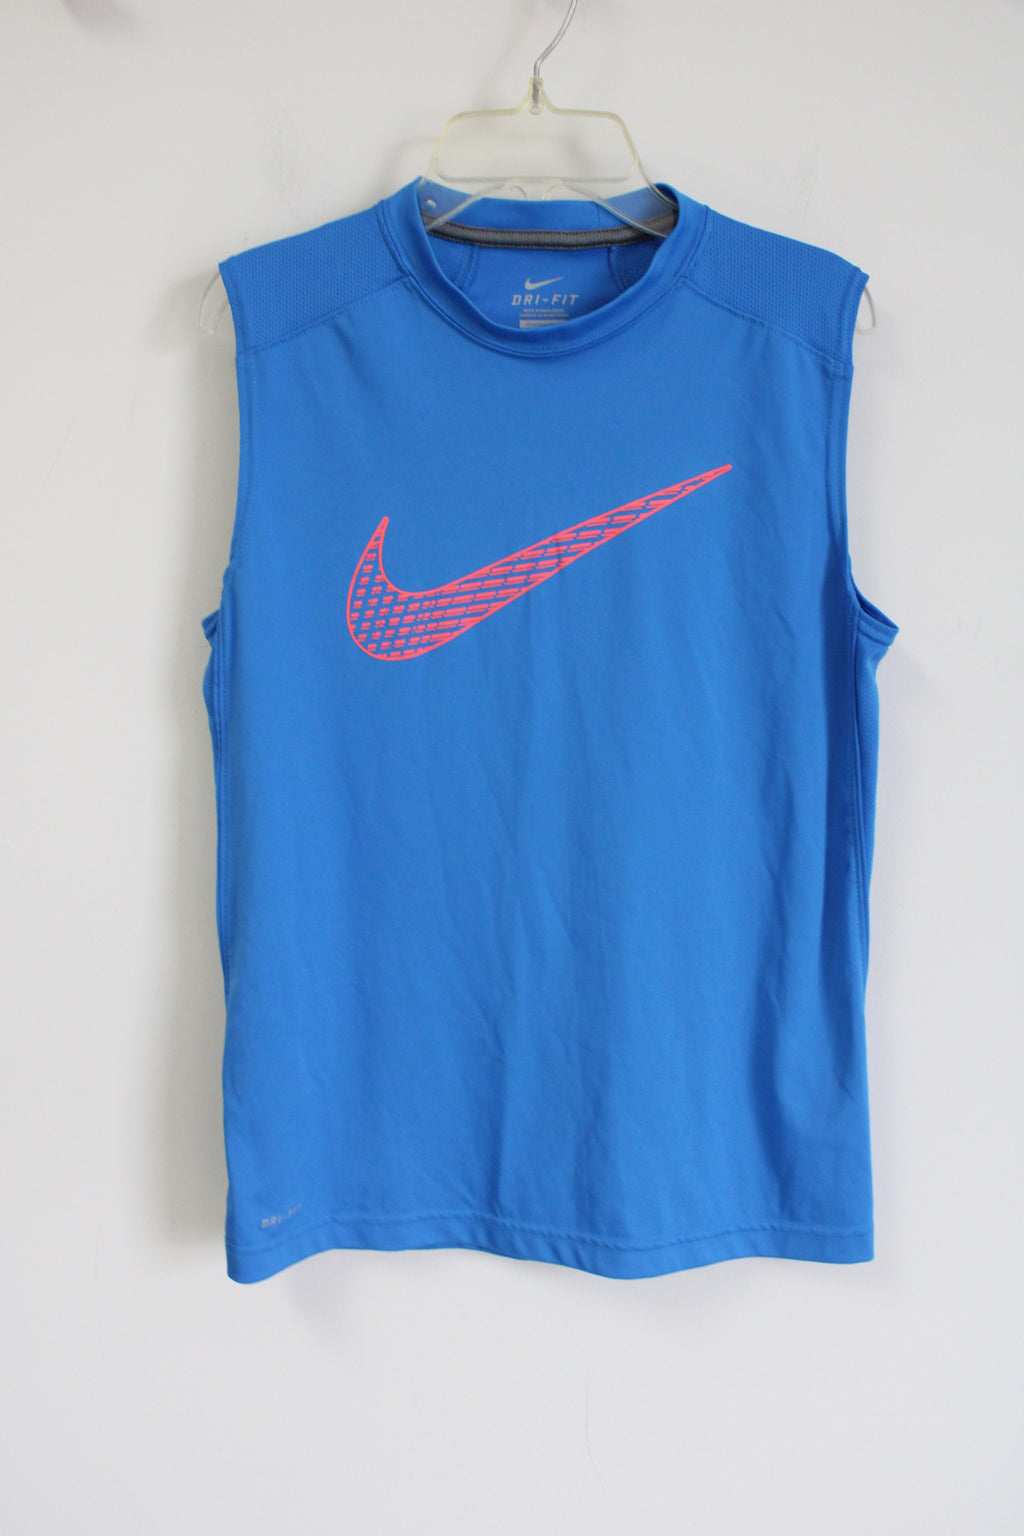 Nike Dri-Fit Blue Orange Logo Tank | Youth L (14/16)